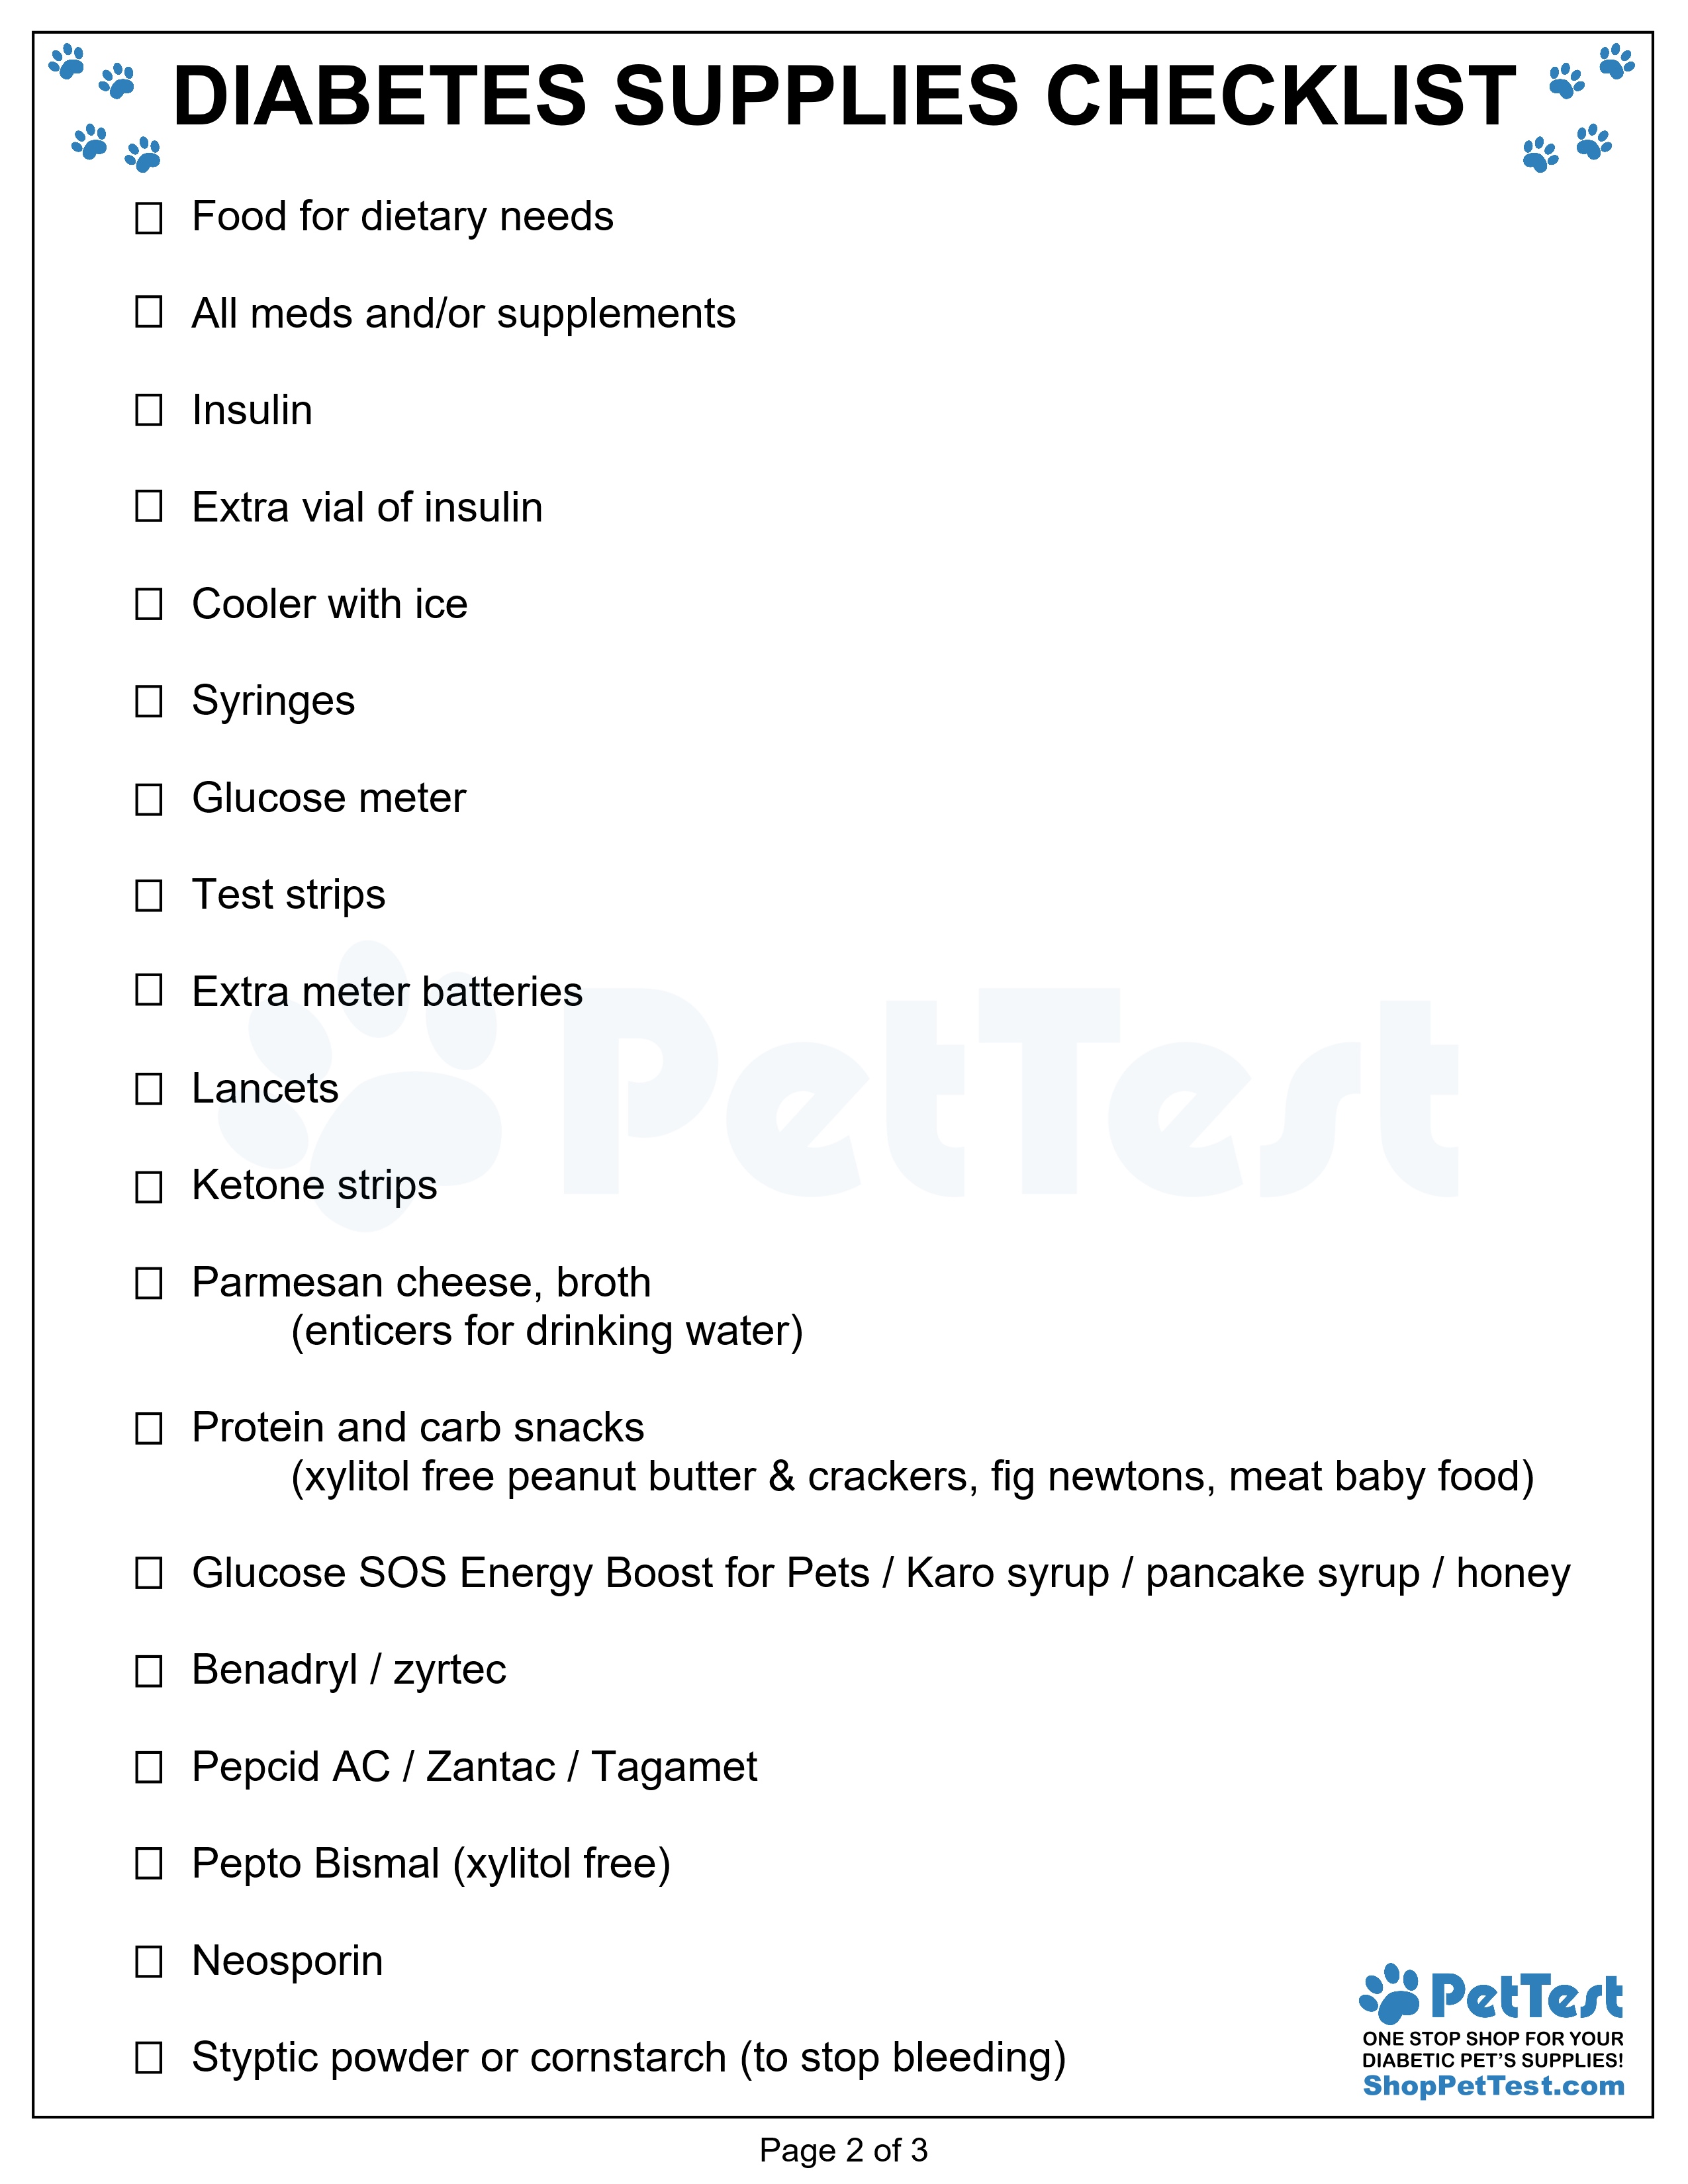 Page 2 Emergency Checklist of P&RTG Blog